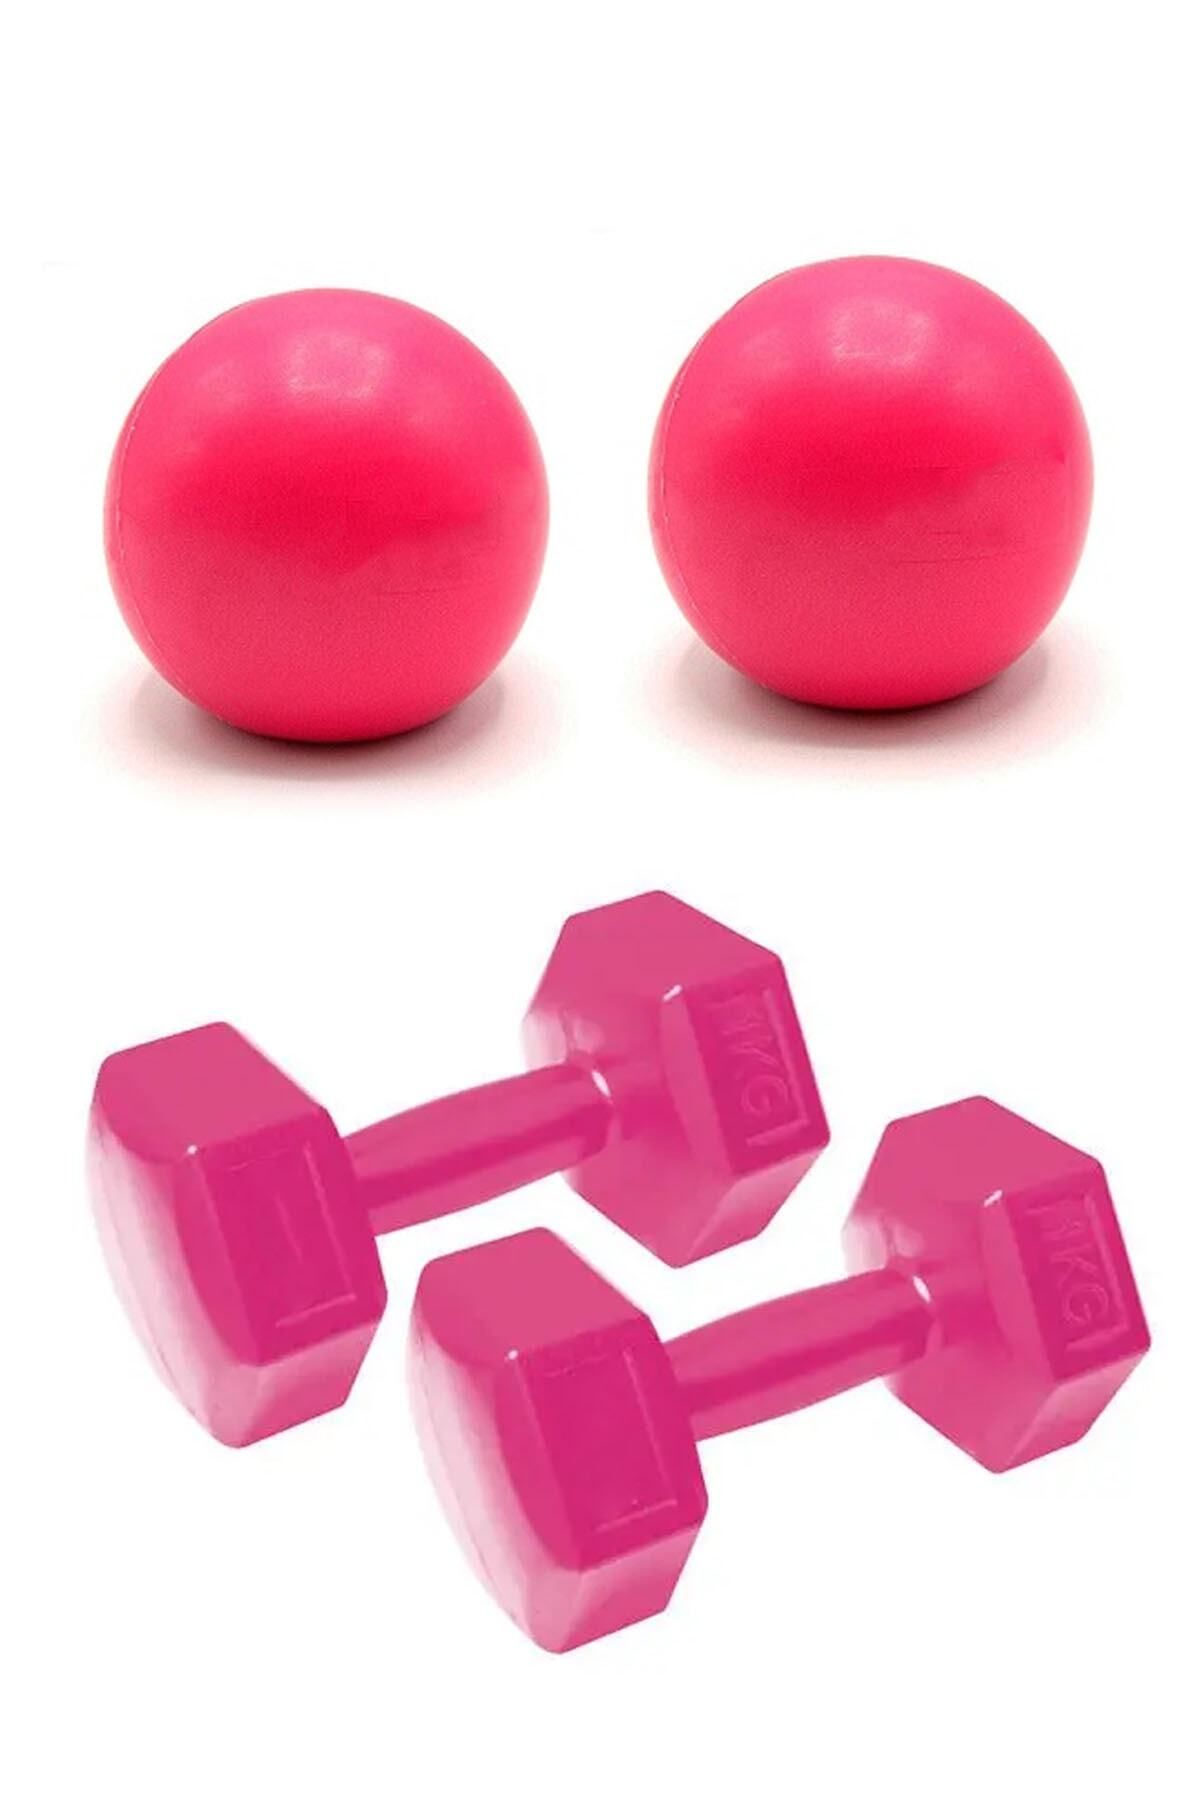 teknotrust Pembe Pilates Ağırlık Topu Ve Dambıl Seti Toning Ball 0.5 Kg X 2adet , Dambıl Seti 1 Kg X 2 Adet Set